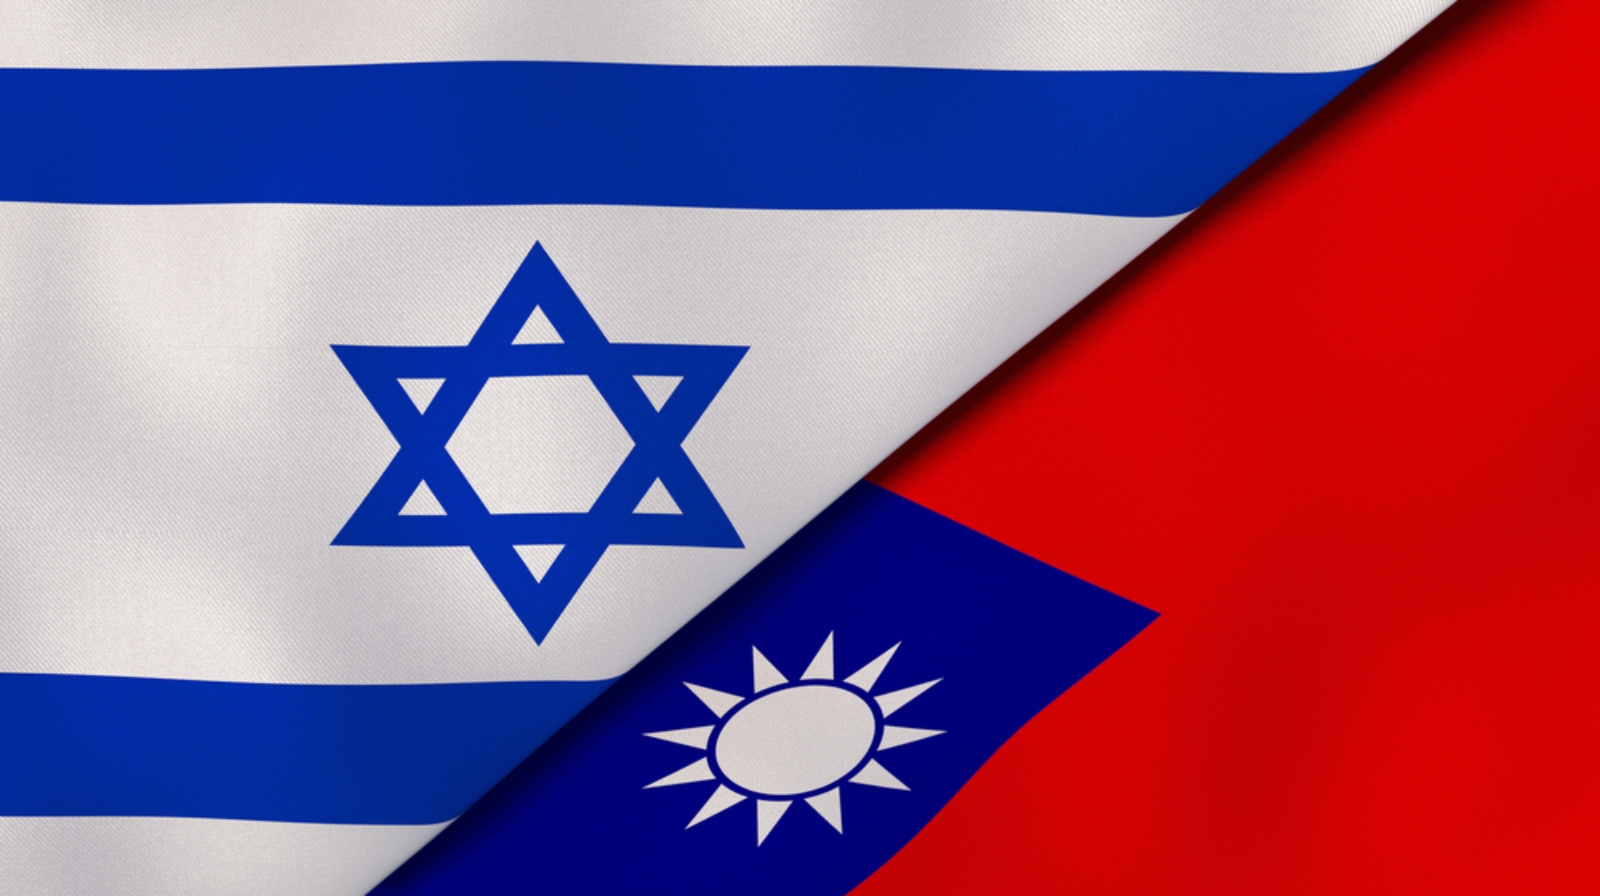 Israeli and Taiwanese flags. Image by Maksym Kapliuk via Shutterstock.com